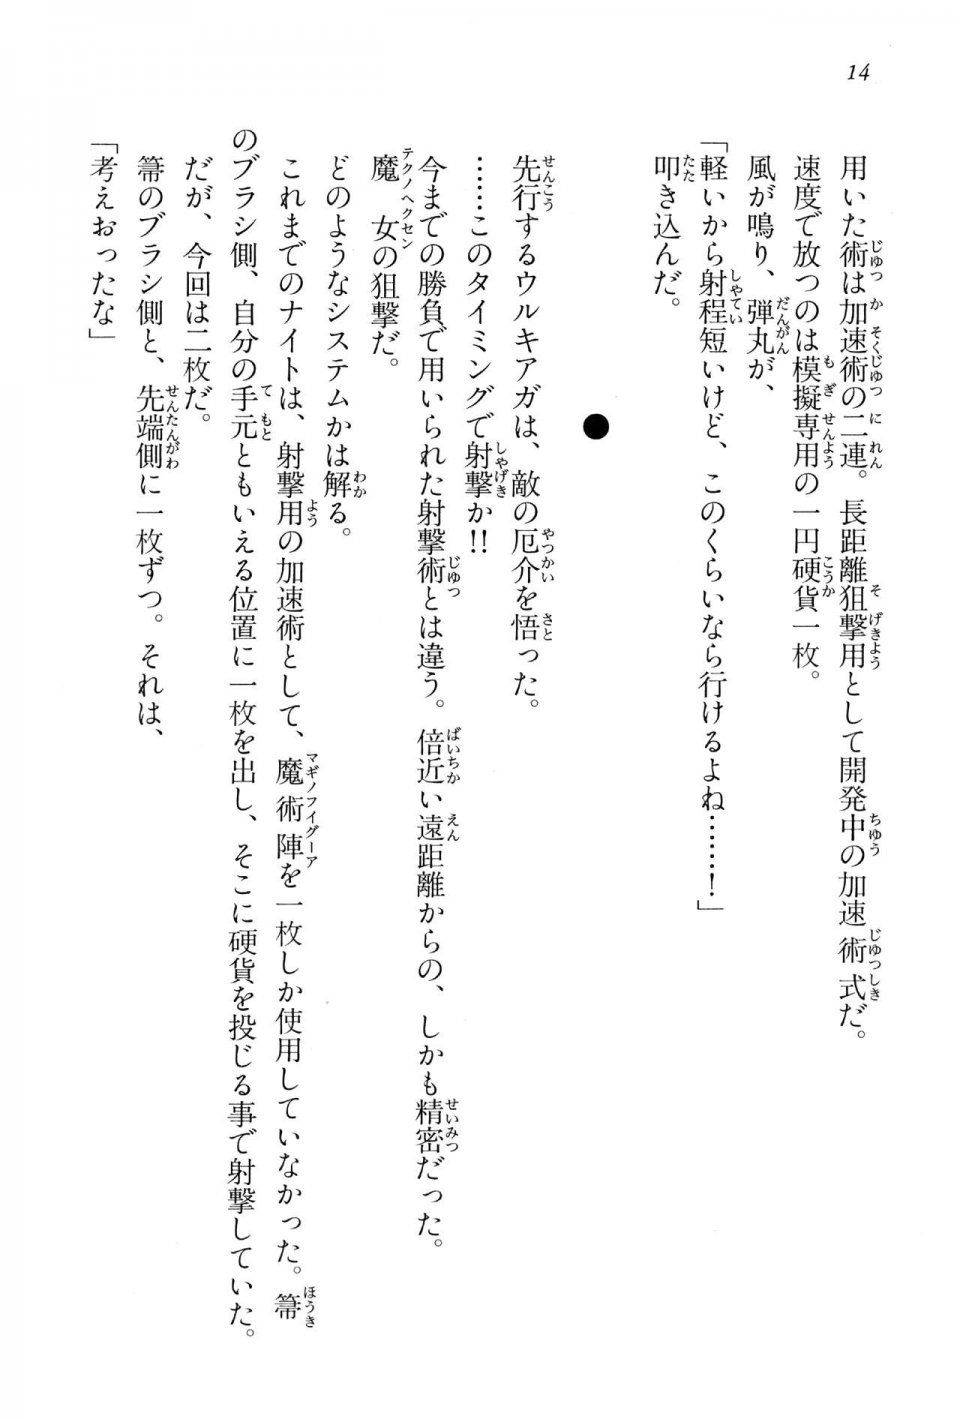 Kyoukai Senjou no Horizon BD Special Mininovel Vol 2(1B) - Photo #18